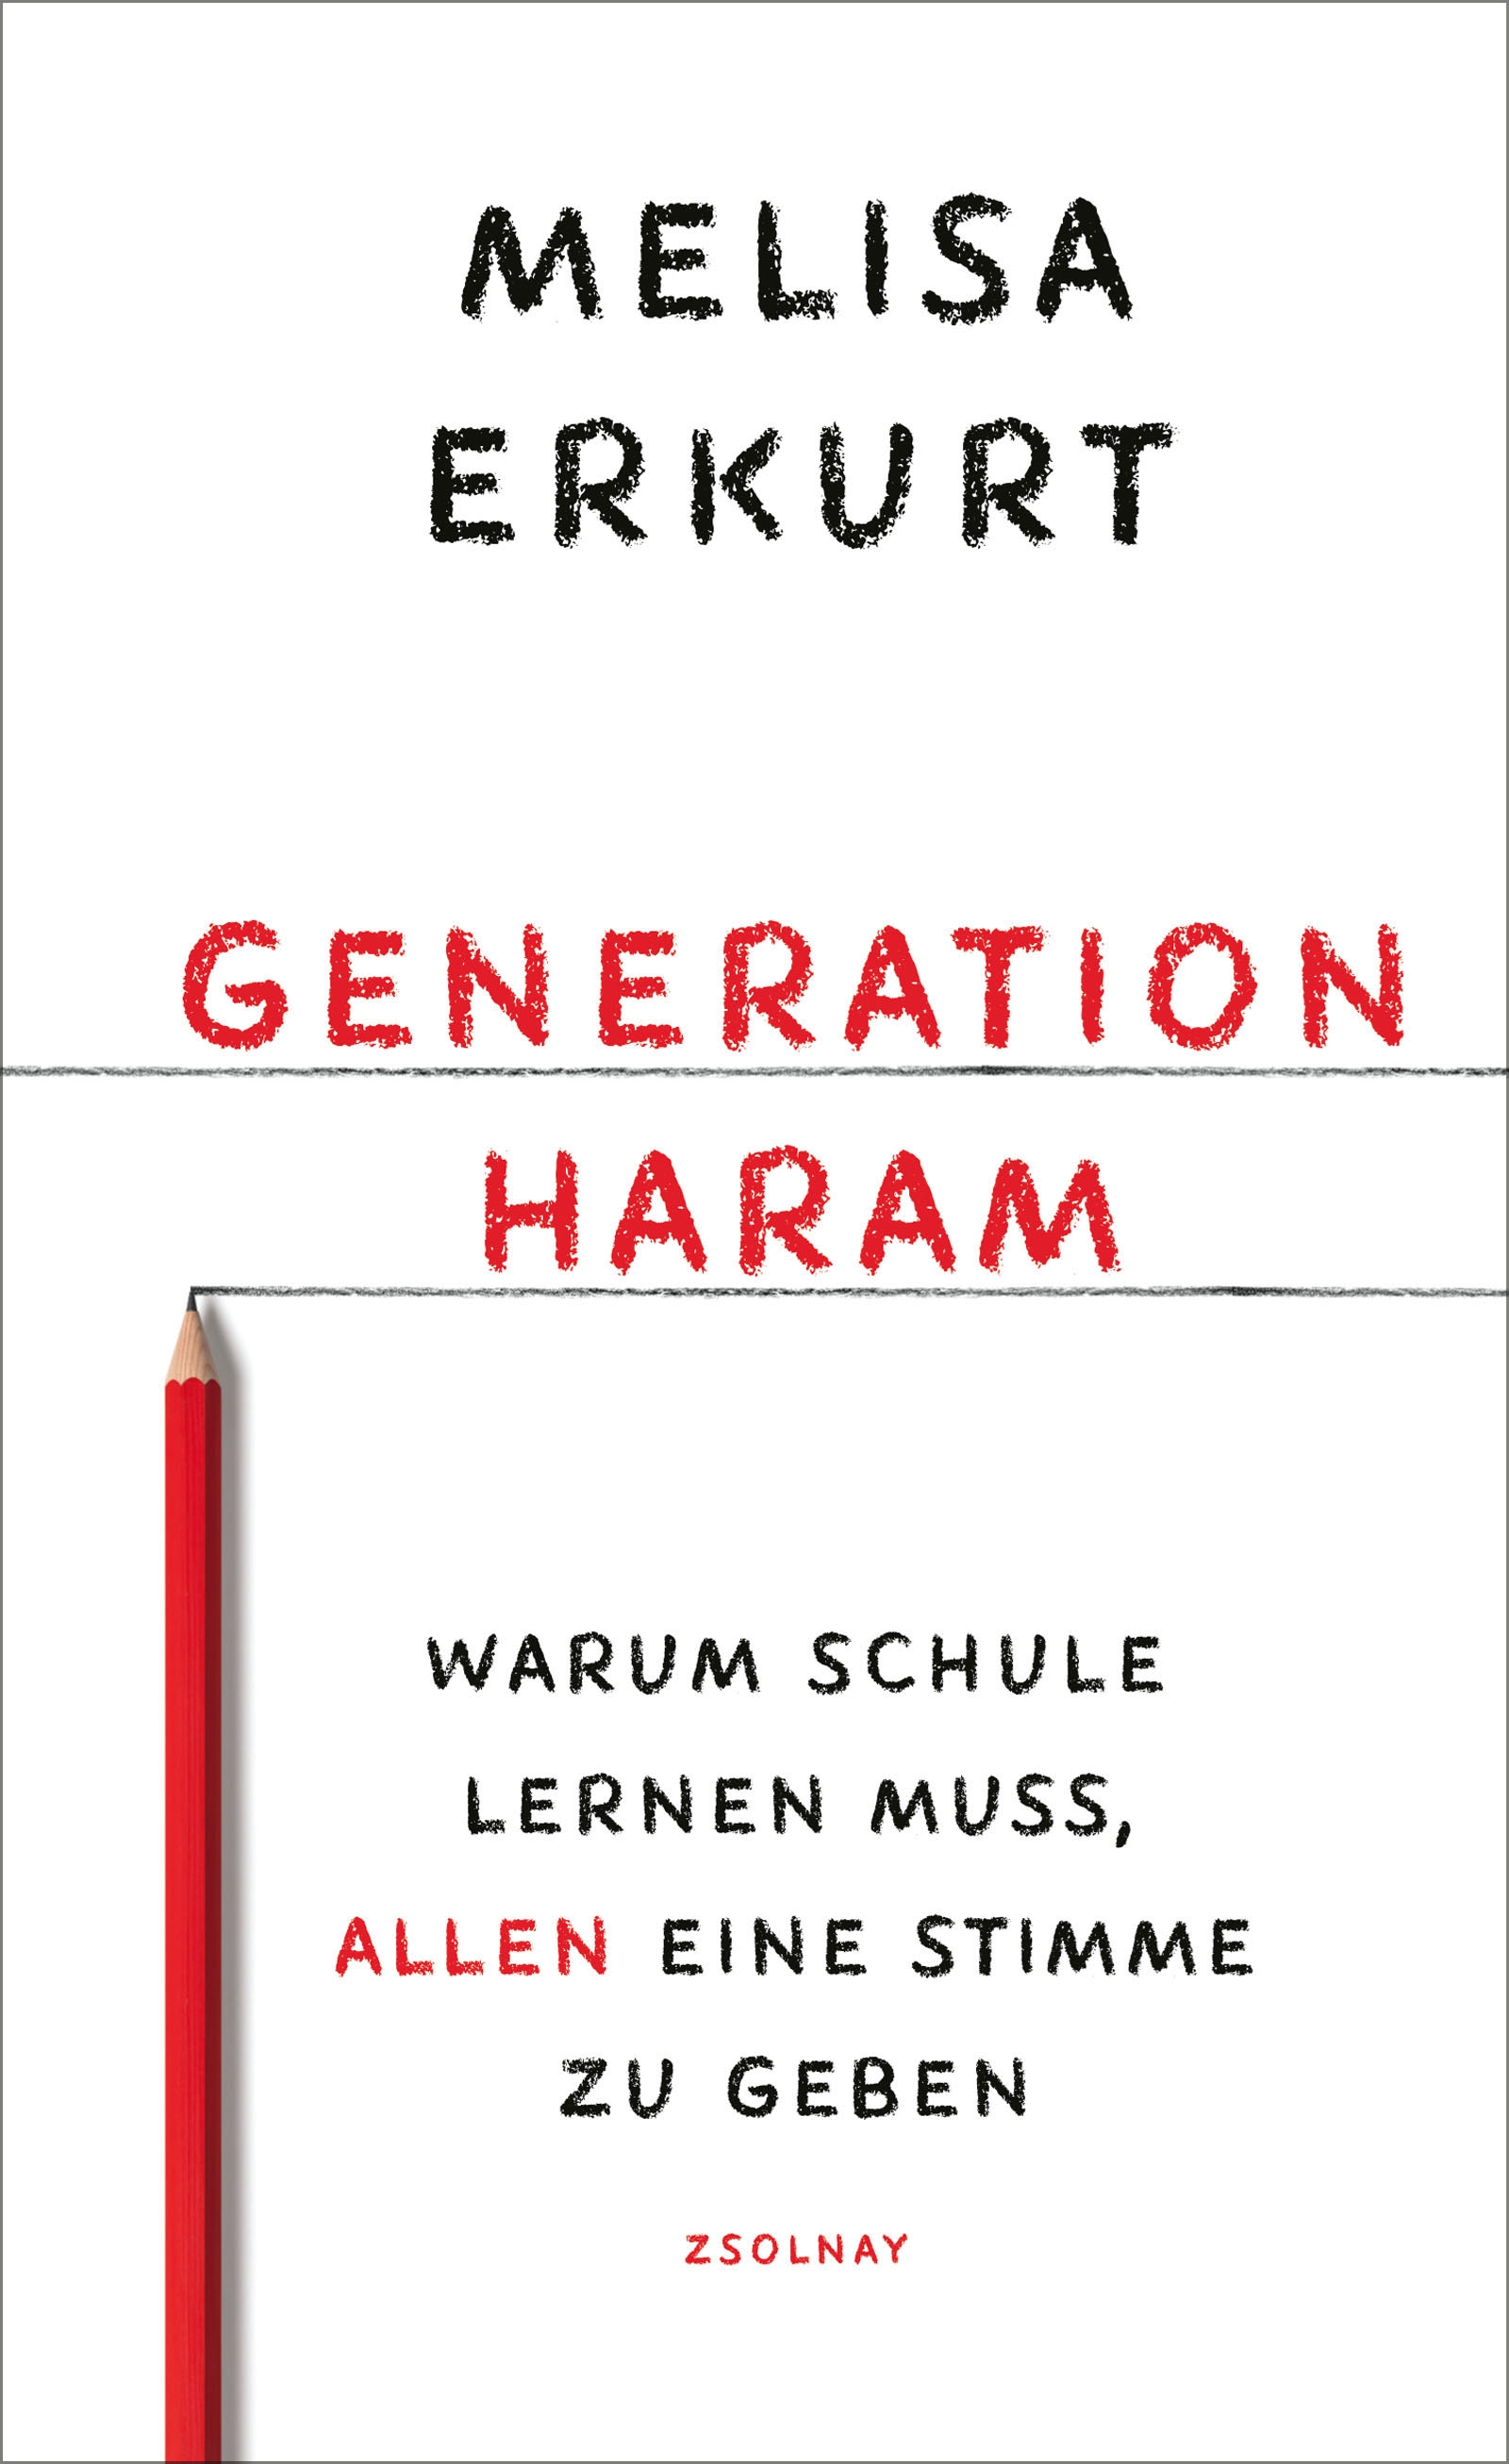 Buchcover Melisa Erkurt: "Generation haram" im Verlag Paul Zsolnay